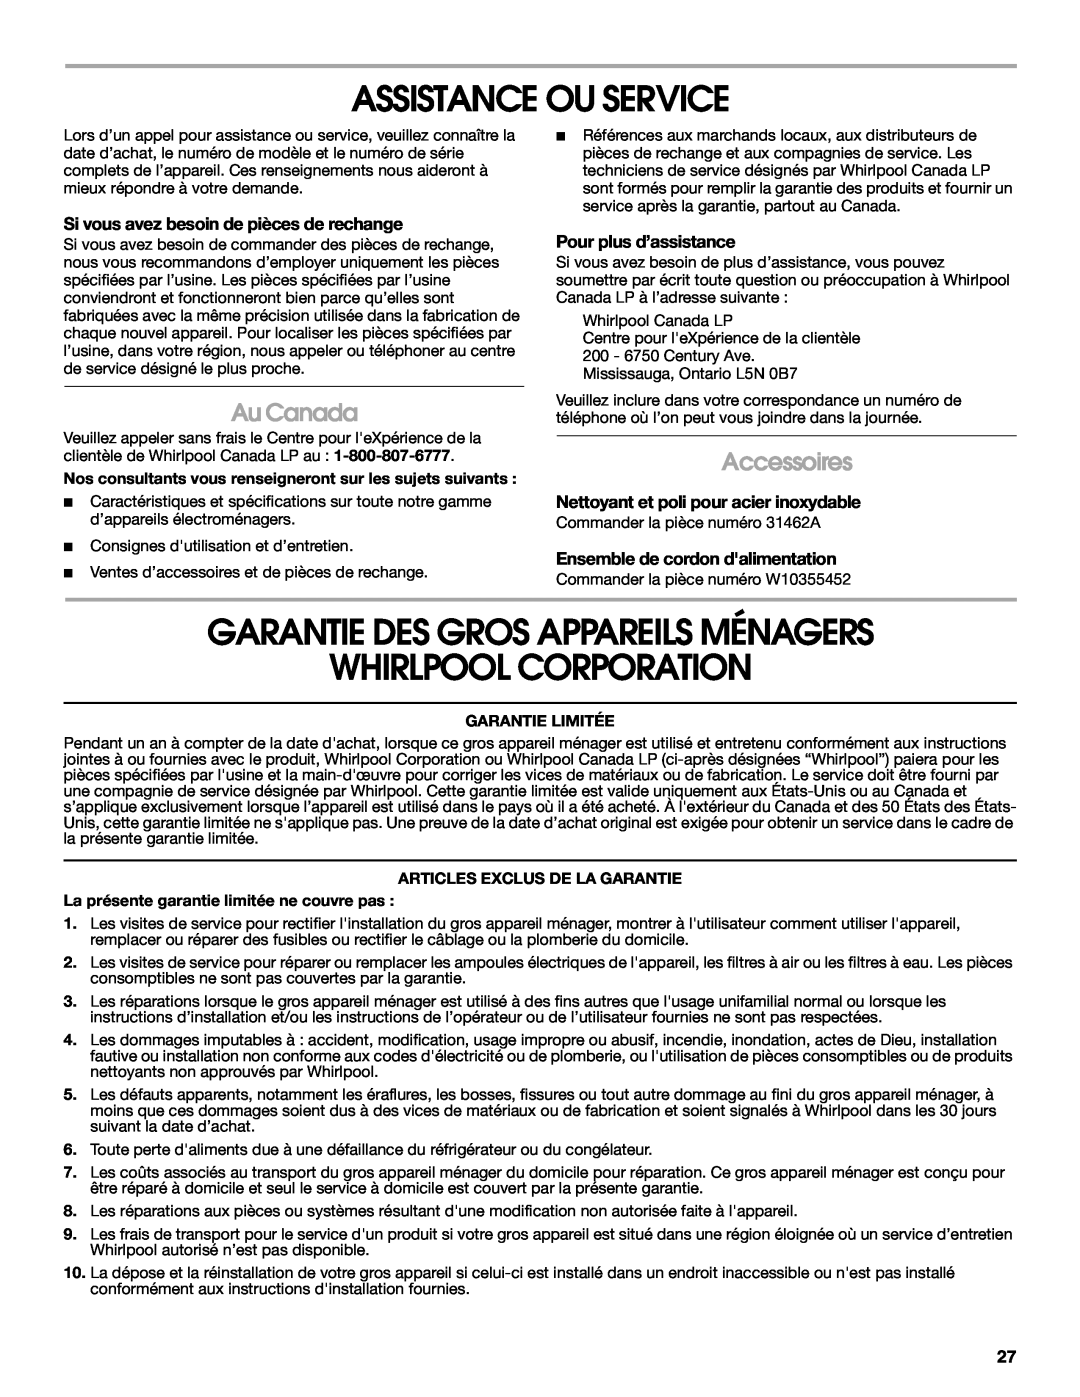 Whirlpool UXT3030AY Assistance Ou Service, Garantie Des Gros Appareils Ménagers Whirlpool Corporation, Au Canada 